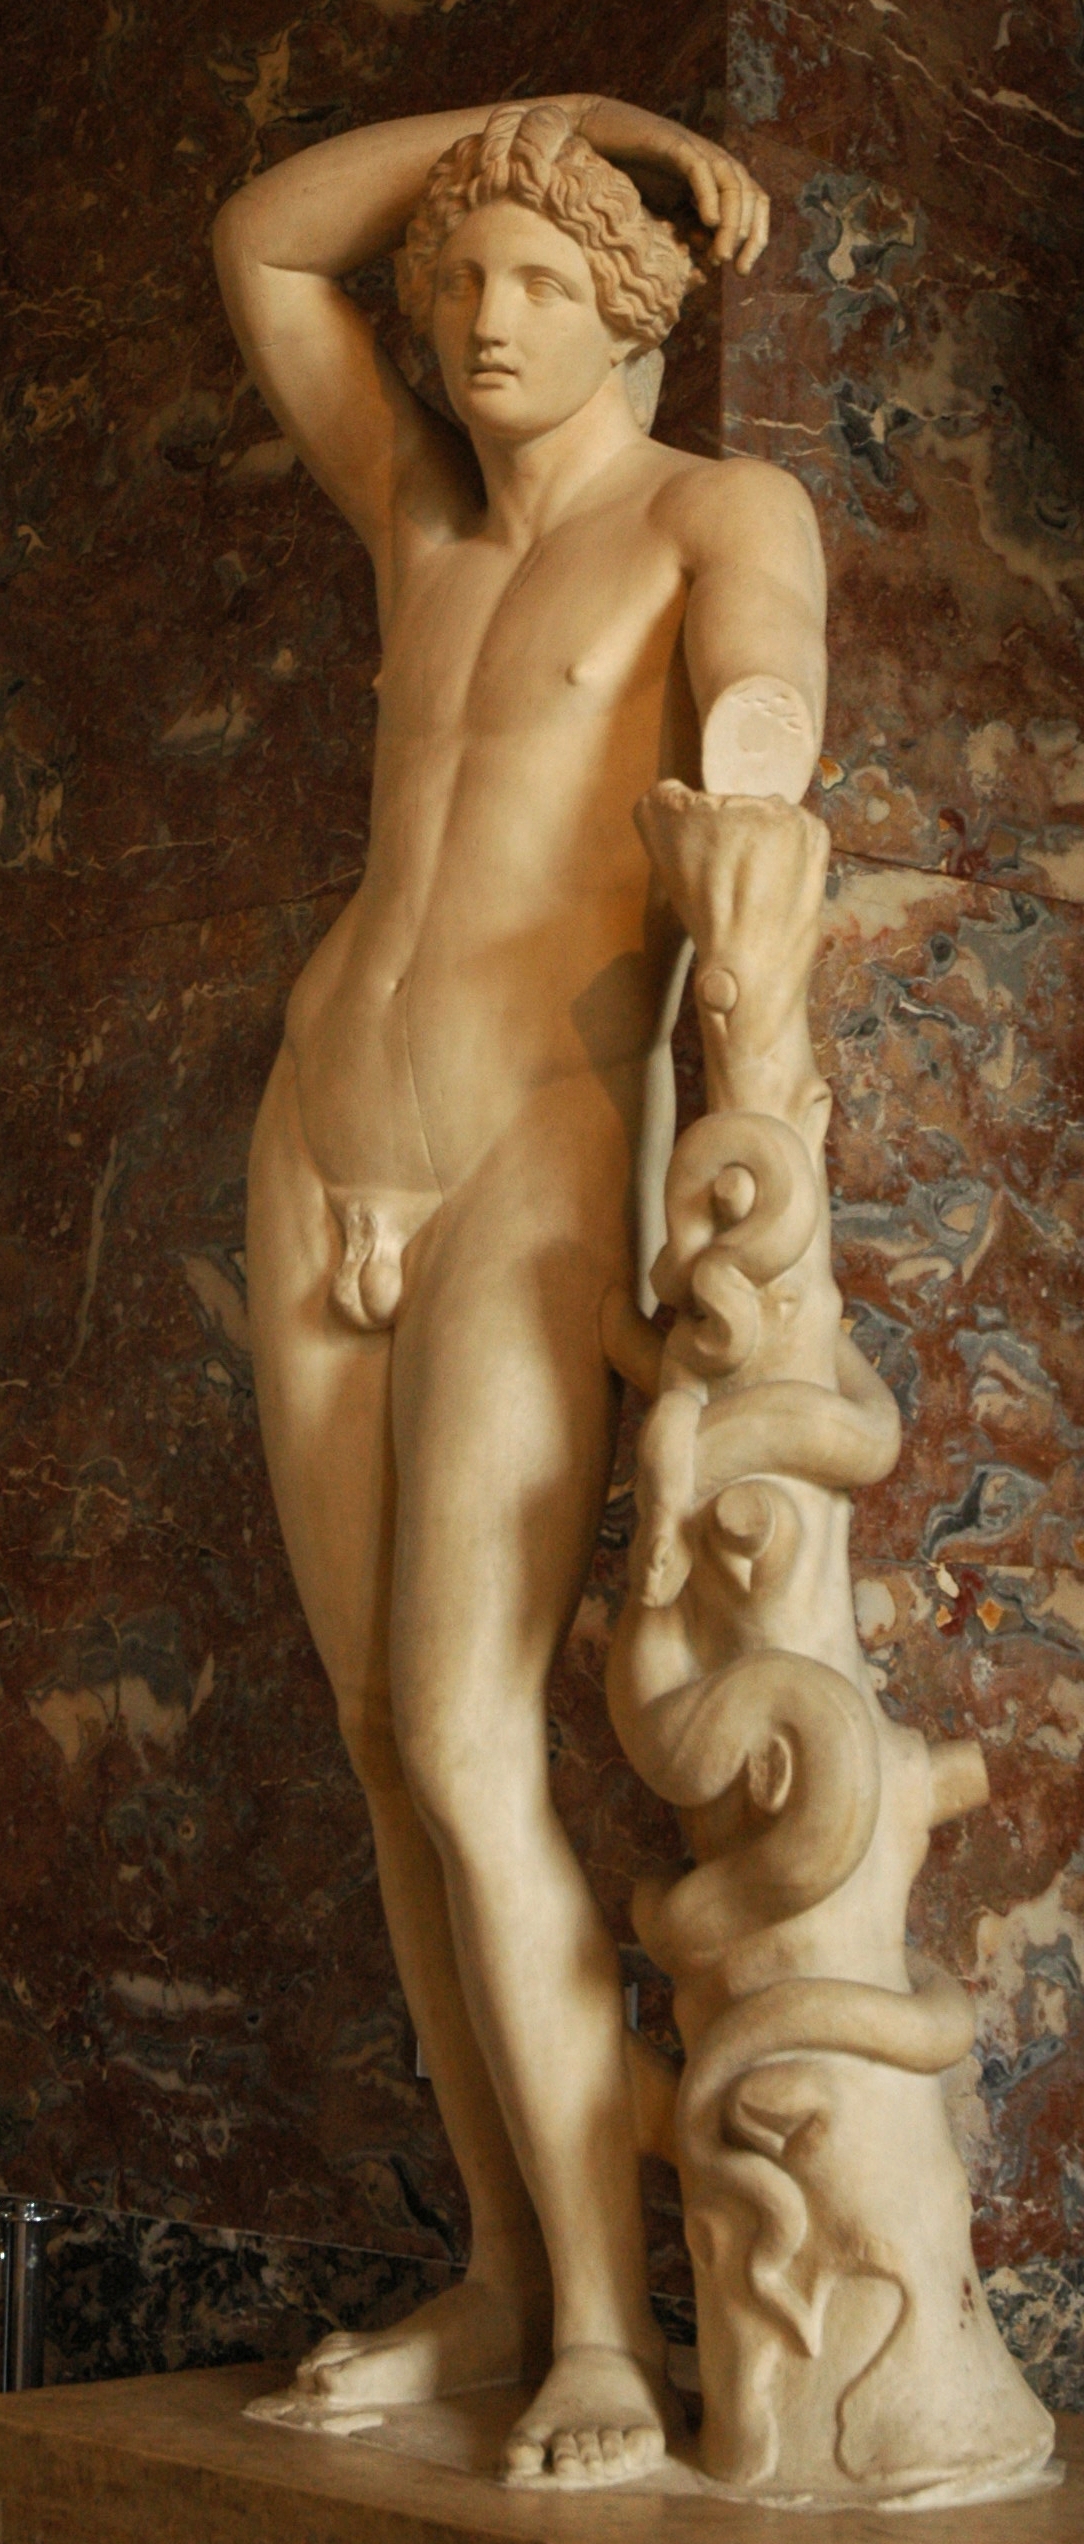 http://upload.wikimedia.org/wikipedia/commons/6/69/Lycian_Apollo_Louvre_left.jpg